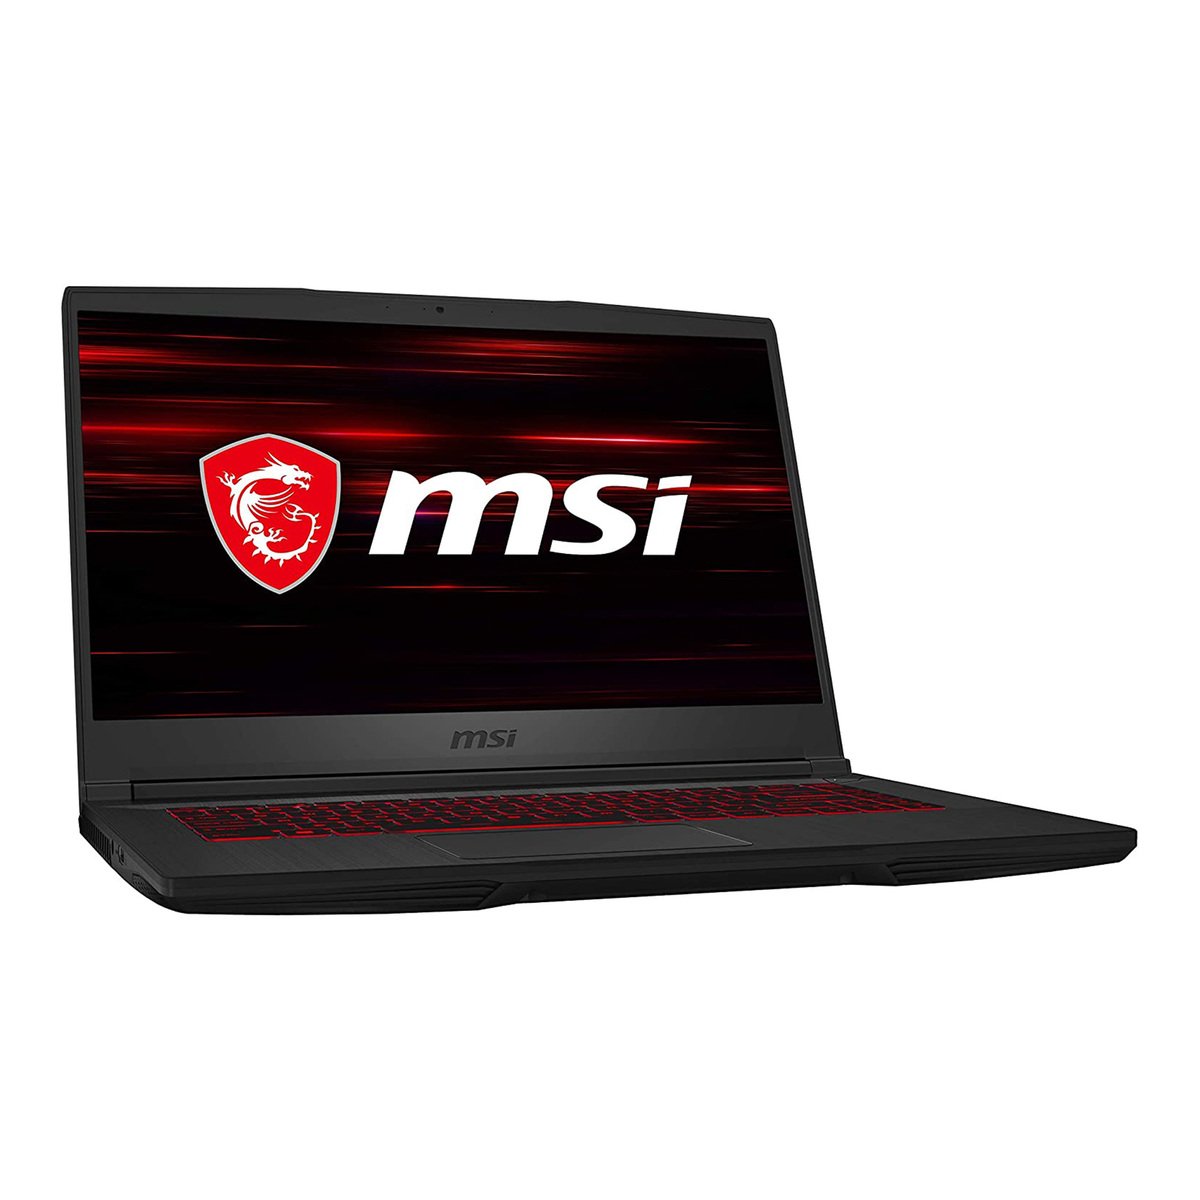 MSI Gaming Notebook 9S7-16R412-1299,Intel Core i5,15.6" FHD IPS-Level,GeForce GTX1650 GDDR6 4GB,8GB RAM,512GB SSD,Windows 10,Black